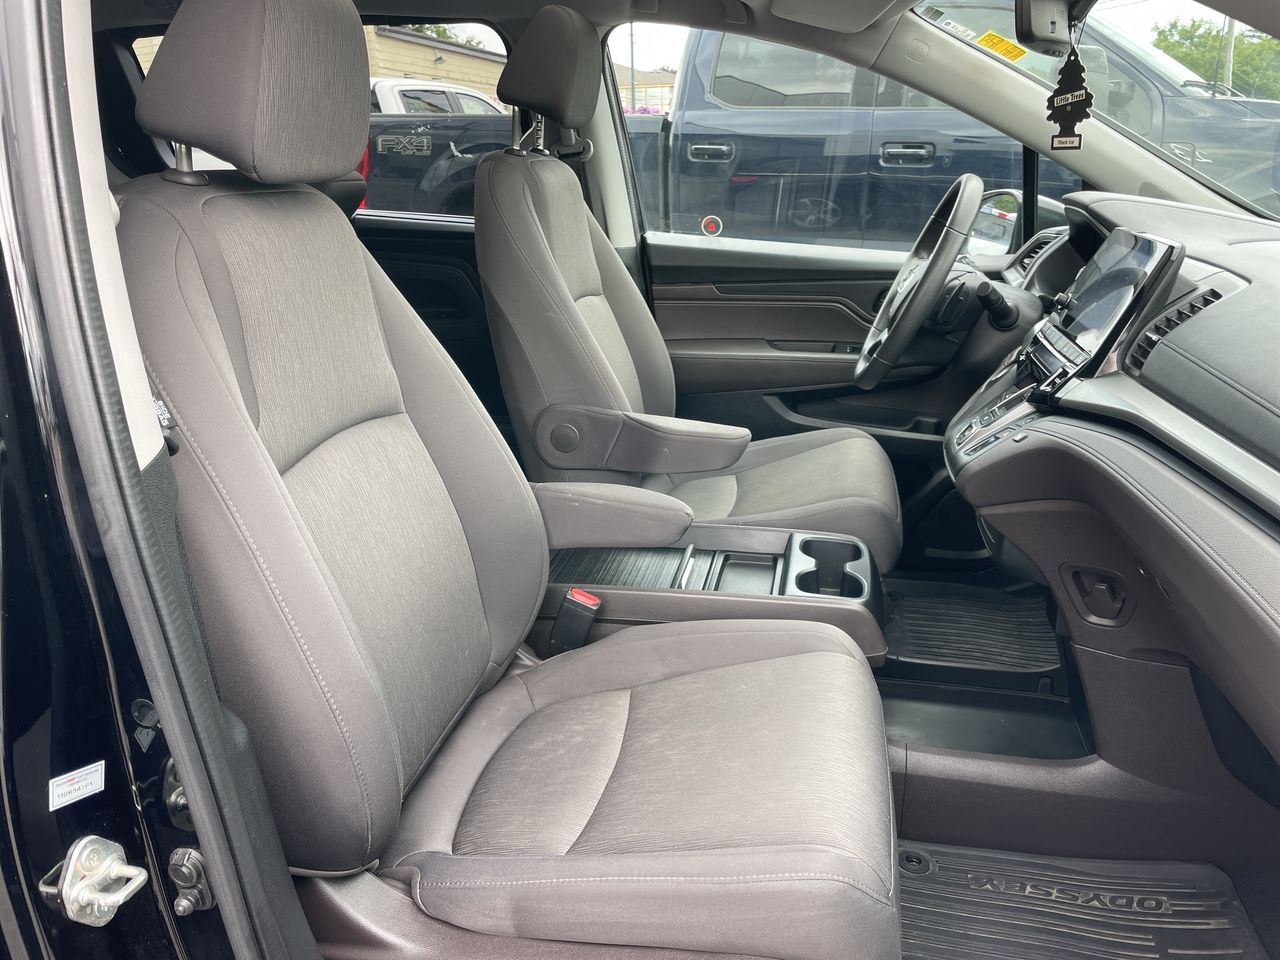 2019 Honda Odyssey - P21095 Full Image 24